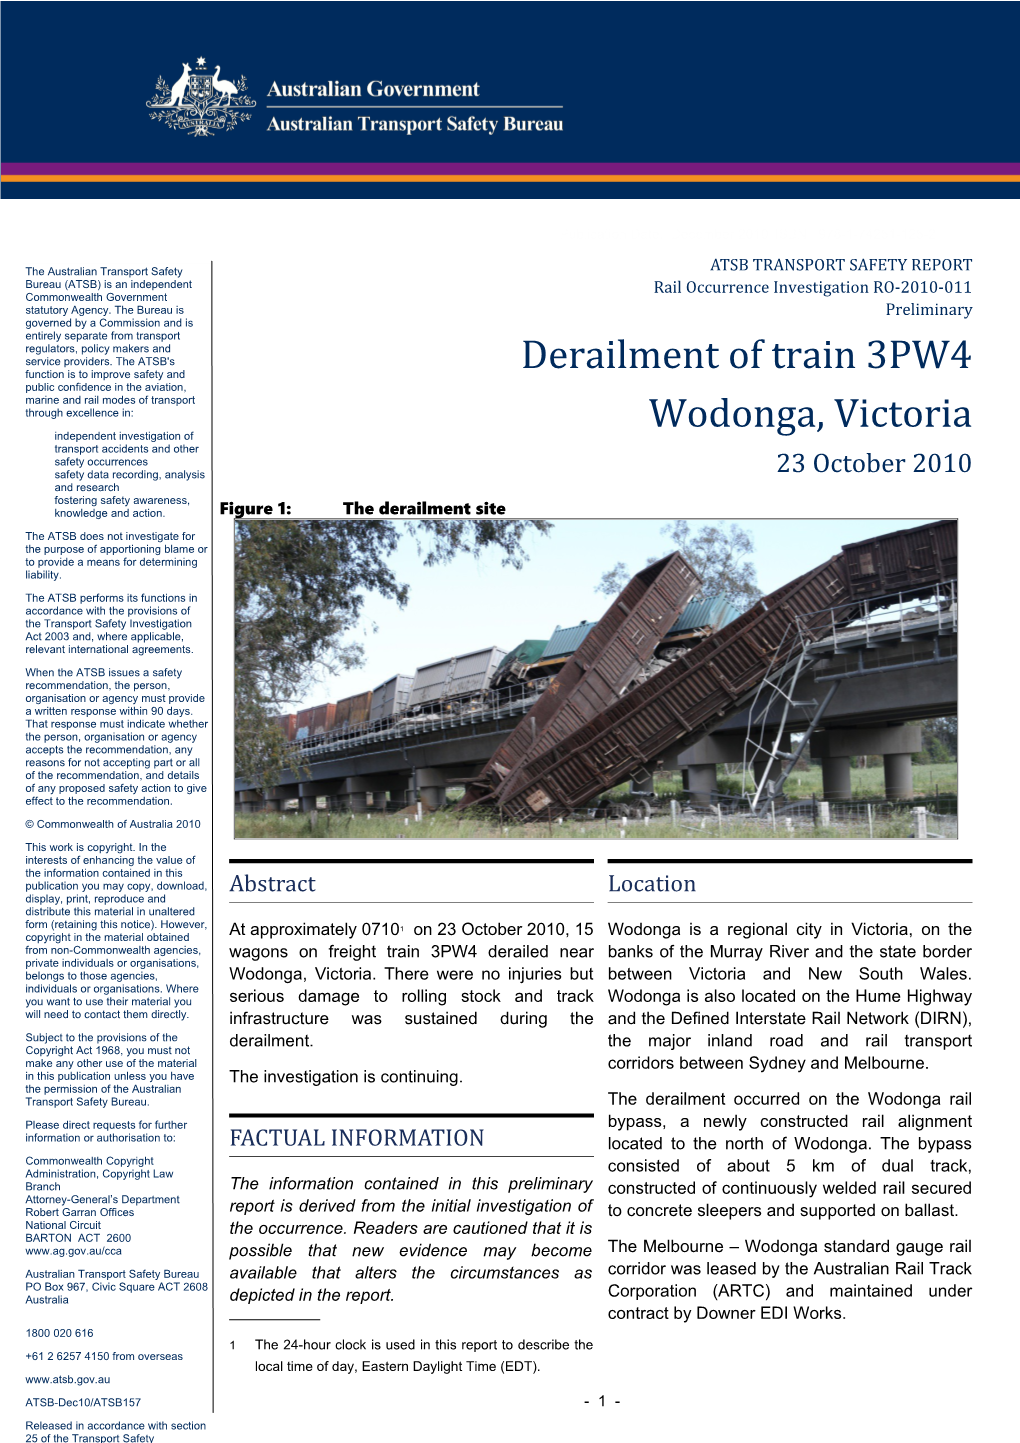 Derailment of Train 3PW4 Wodonga, Victoria 23 October 2010